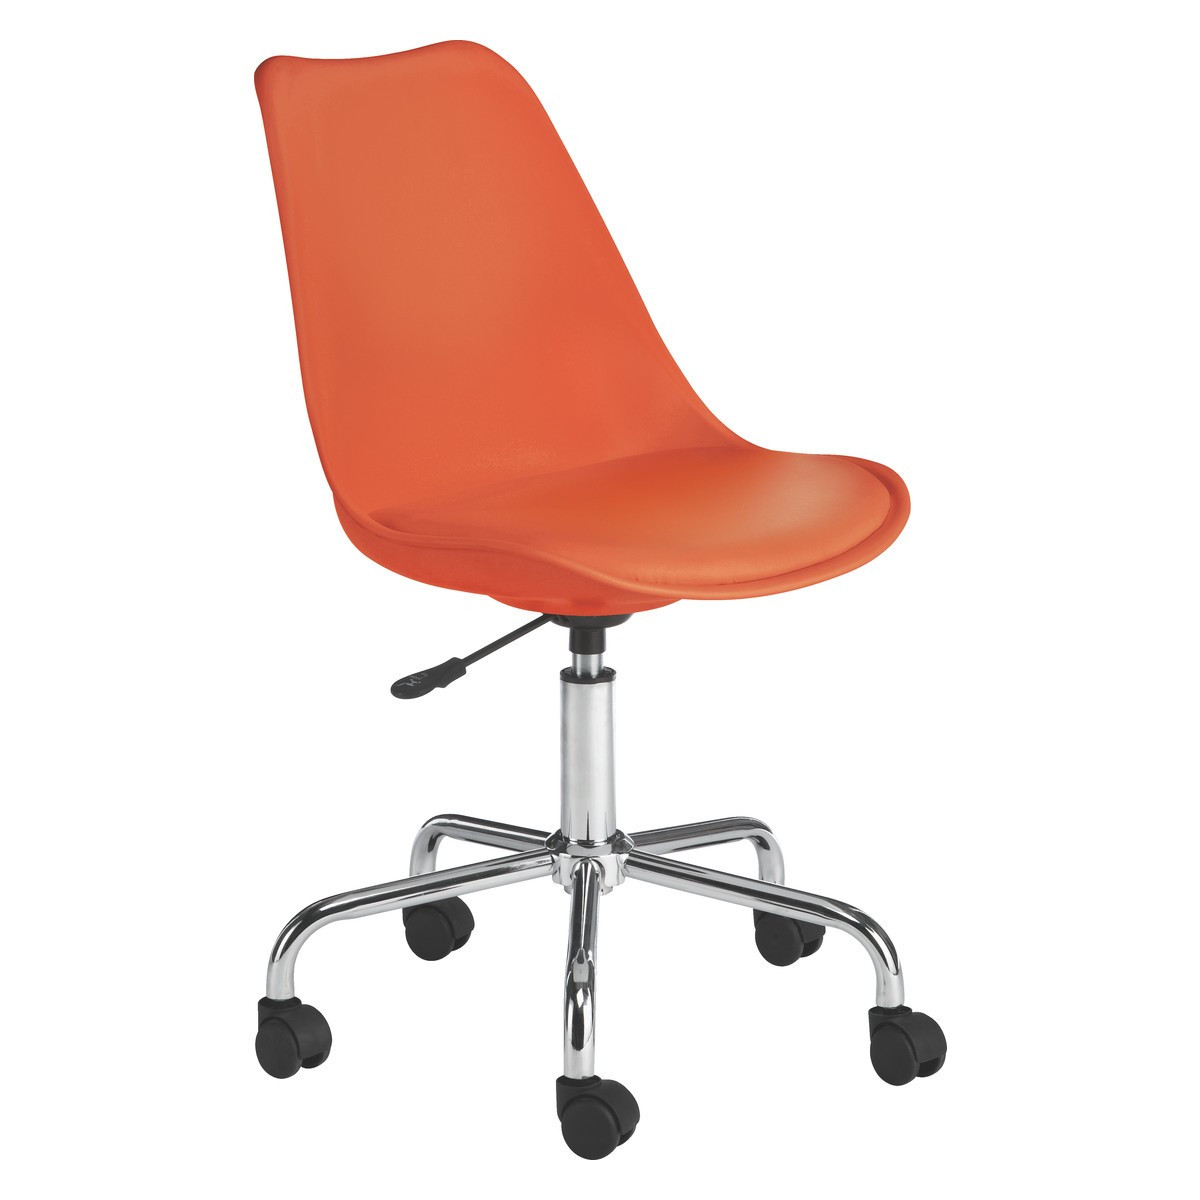 Best ideas about Orange Office Chair
. Save or Pin Orange fice Chairs richfielduniversity Now.